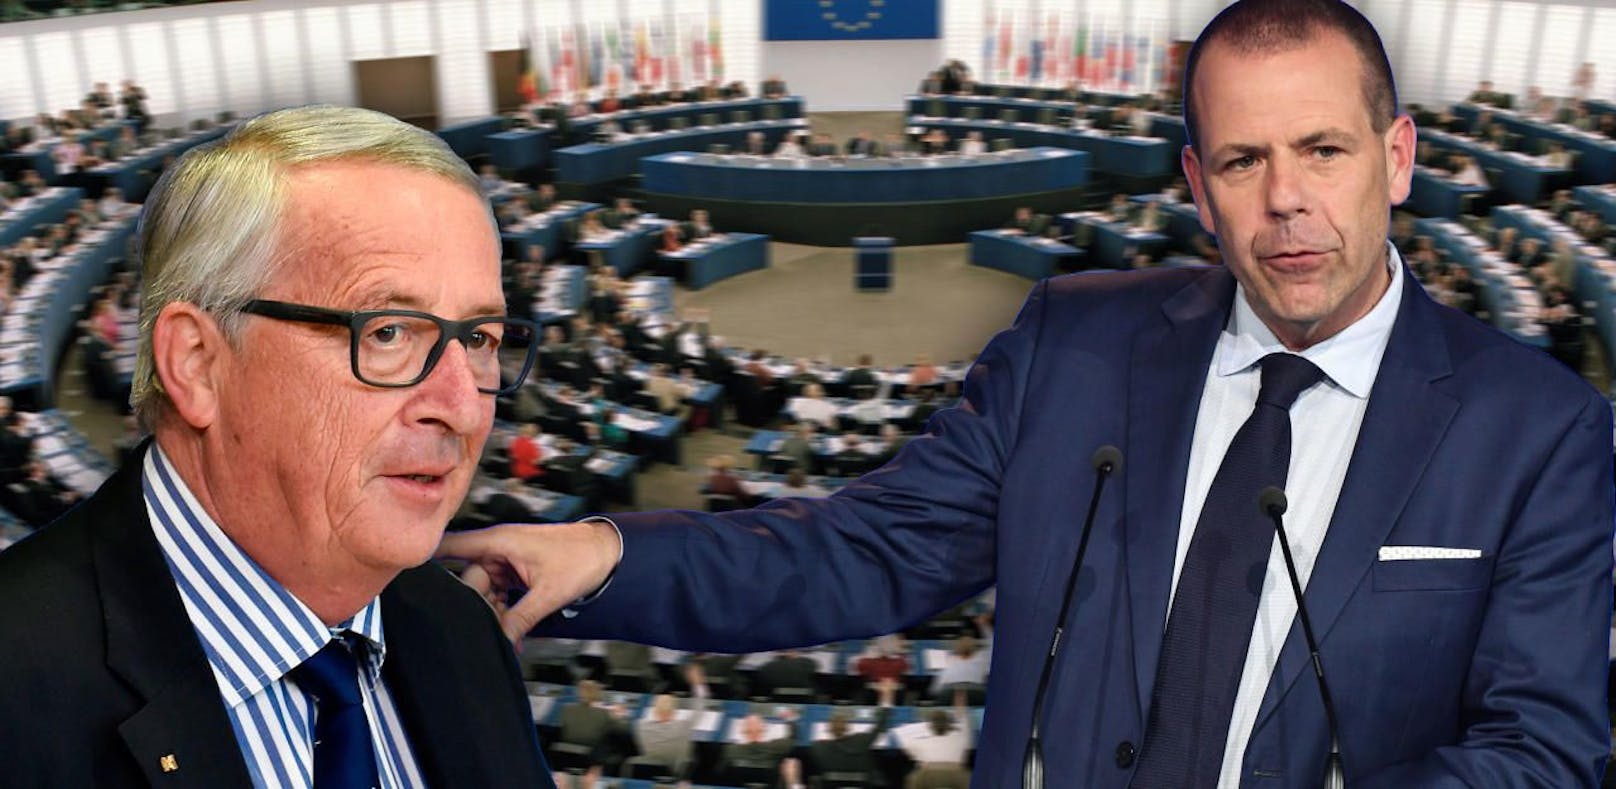 Vilimsky ärgert sich über Juncker.